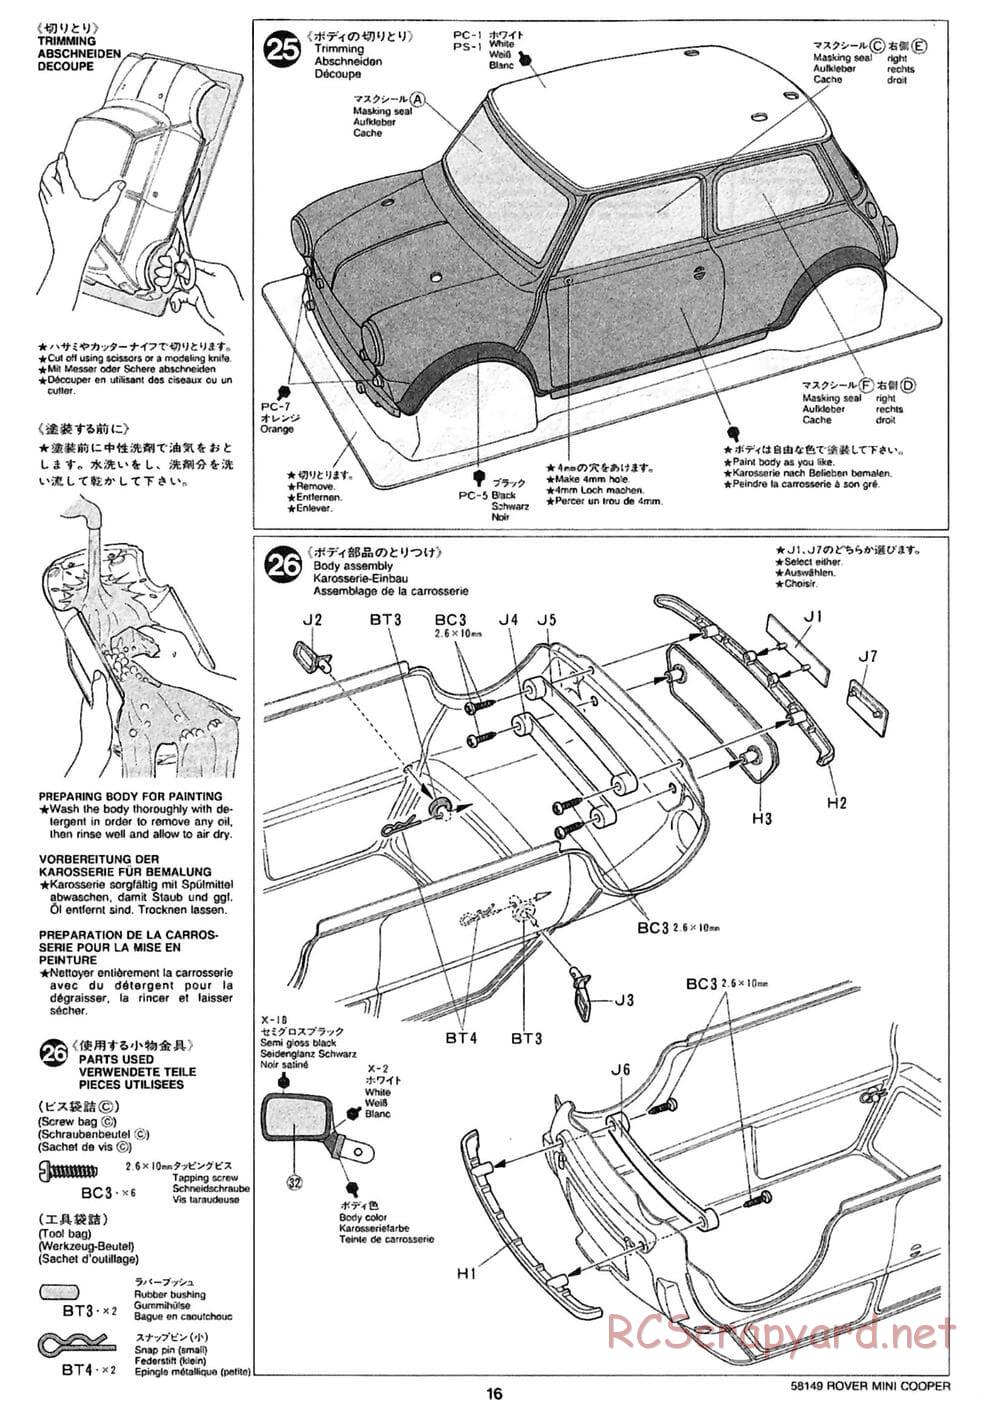 Tamiya - Rover Mini Cooper - M01 Chassis - Manual - Page 16